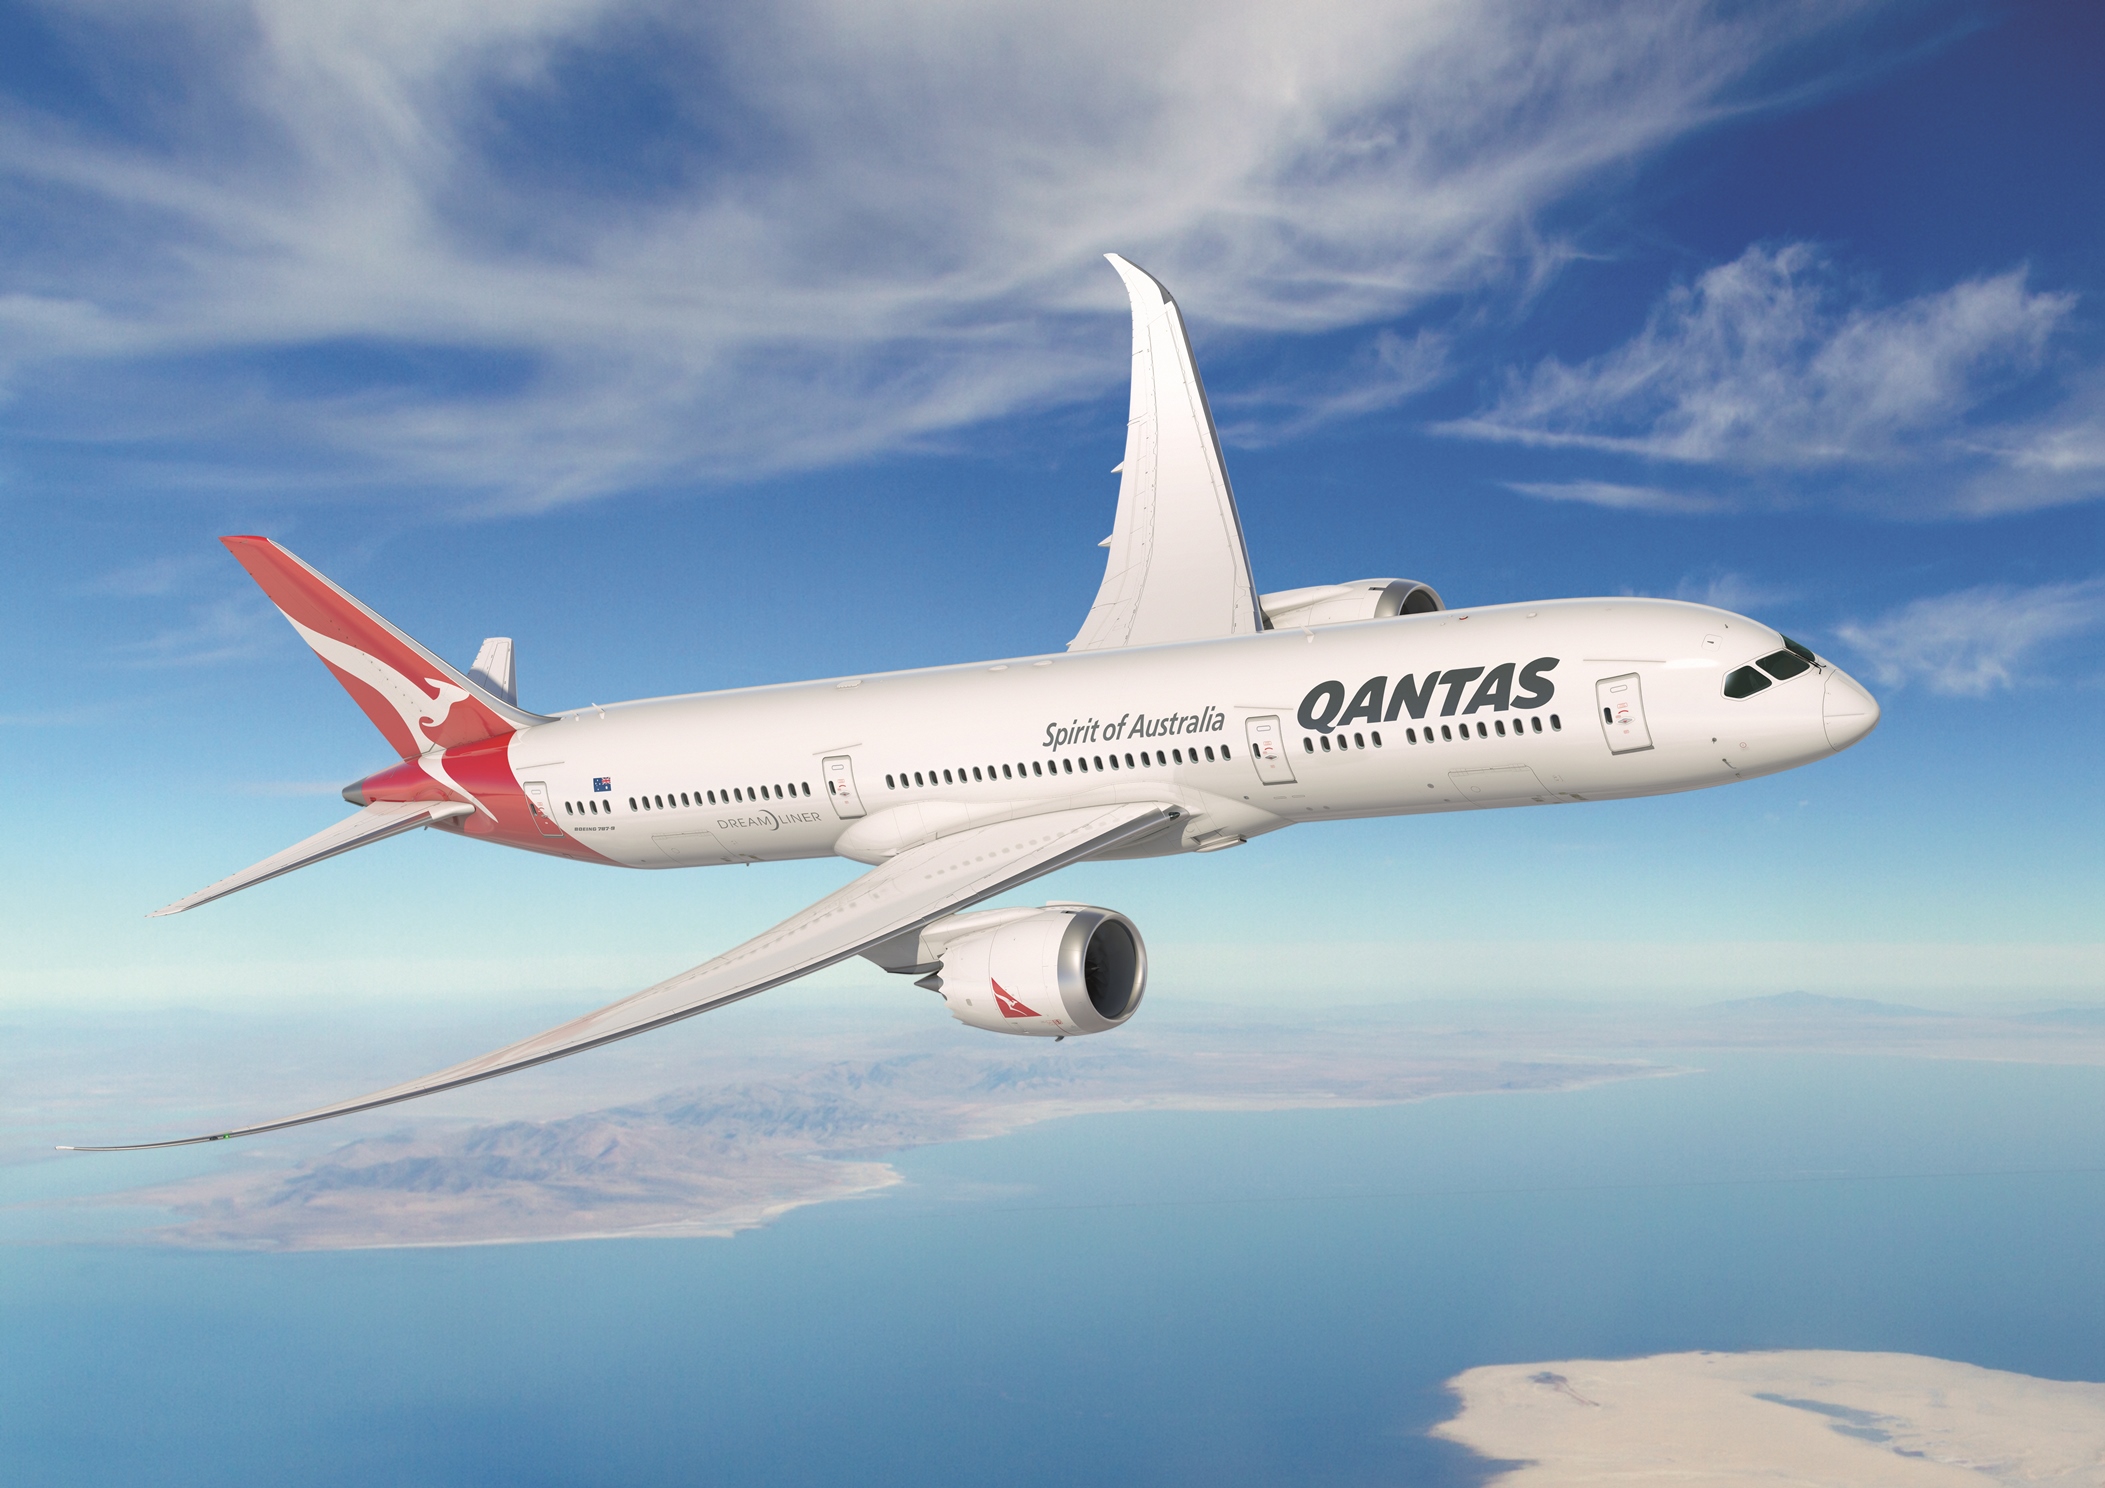 Qantas Perth Hub - Direct Flights from Australia to Europe Coming